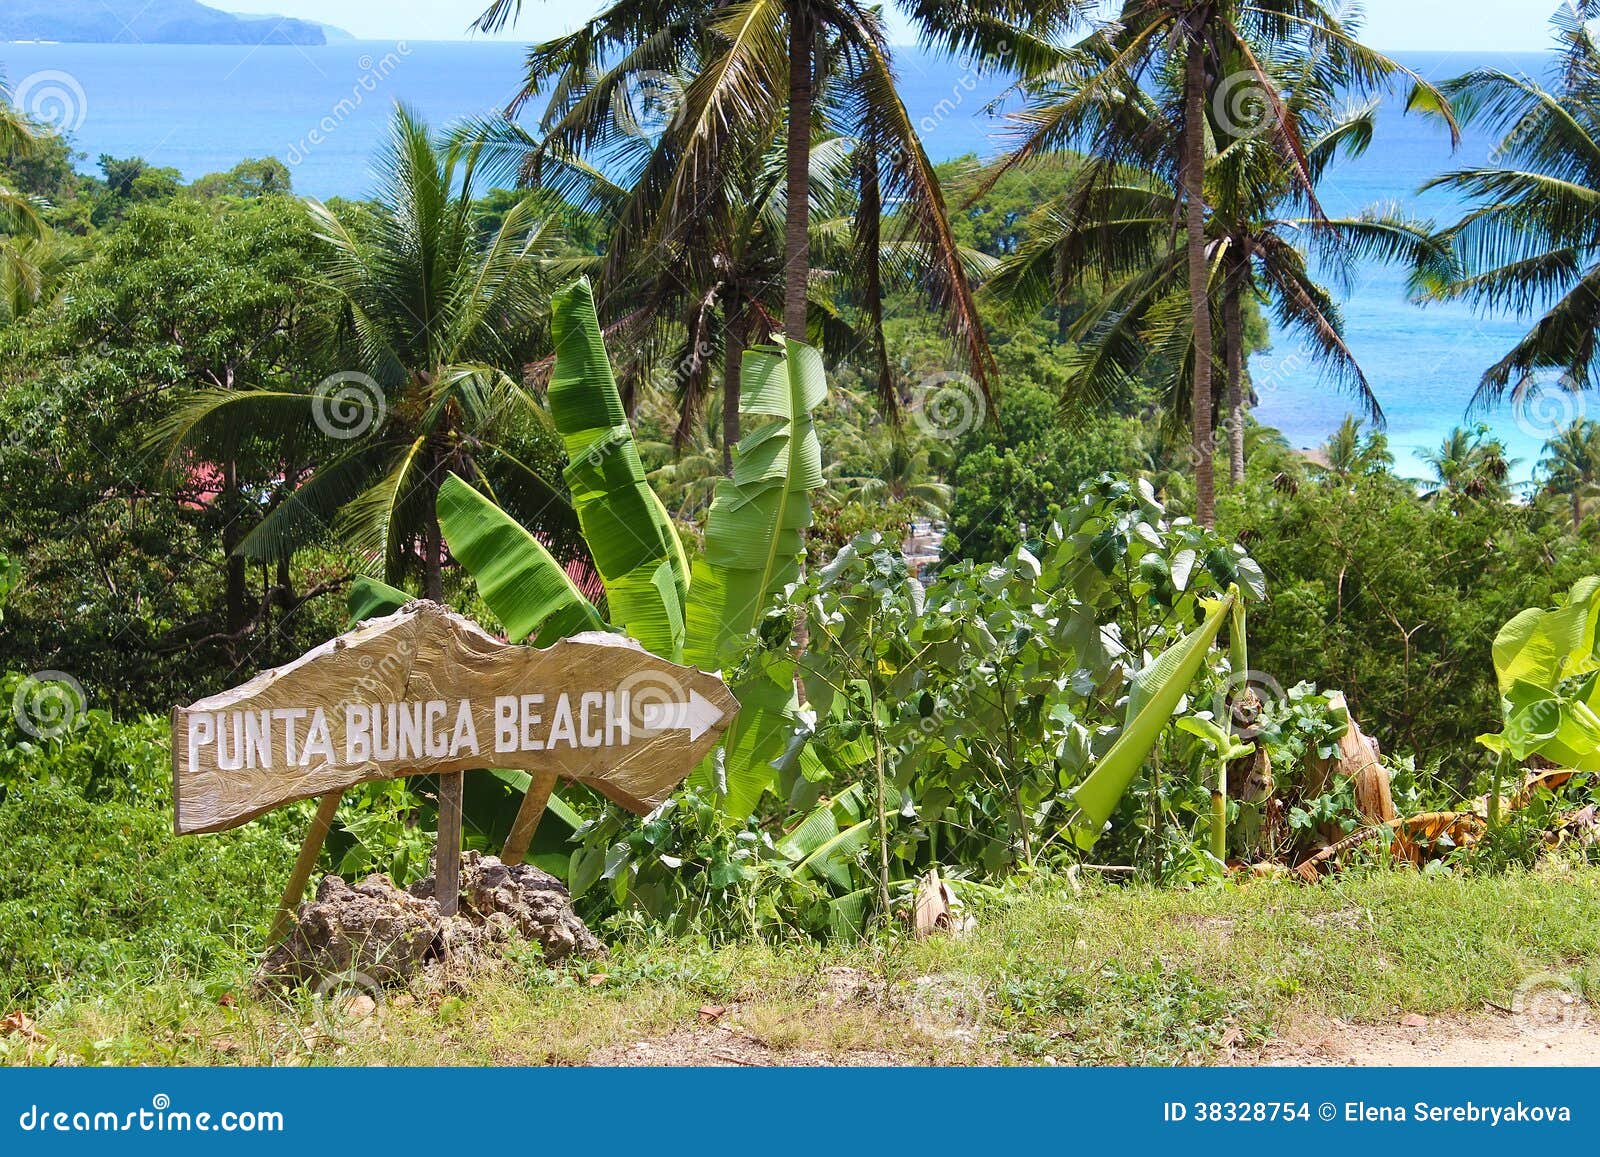 punta bunga beach, boracay. guide-board.